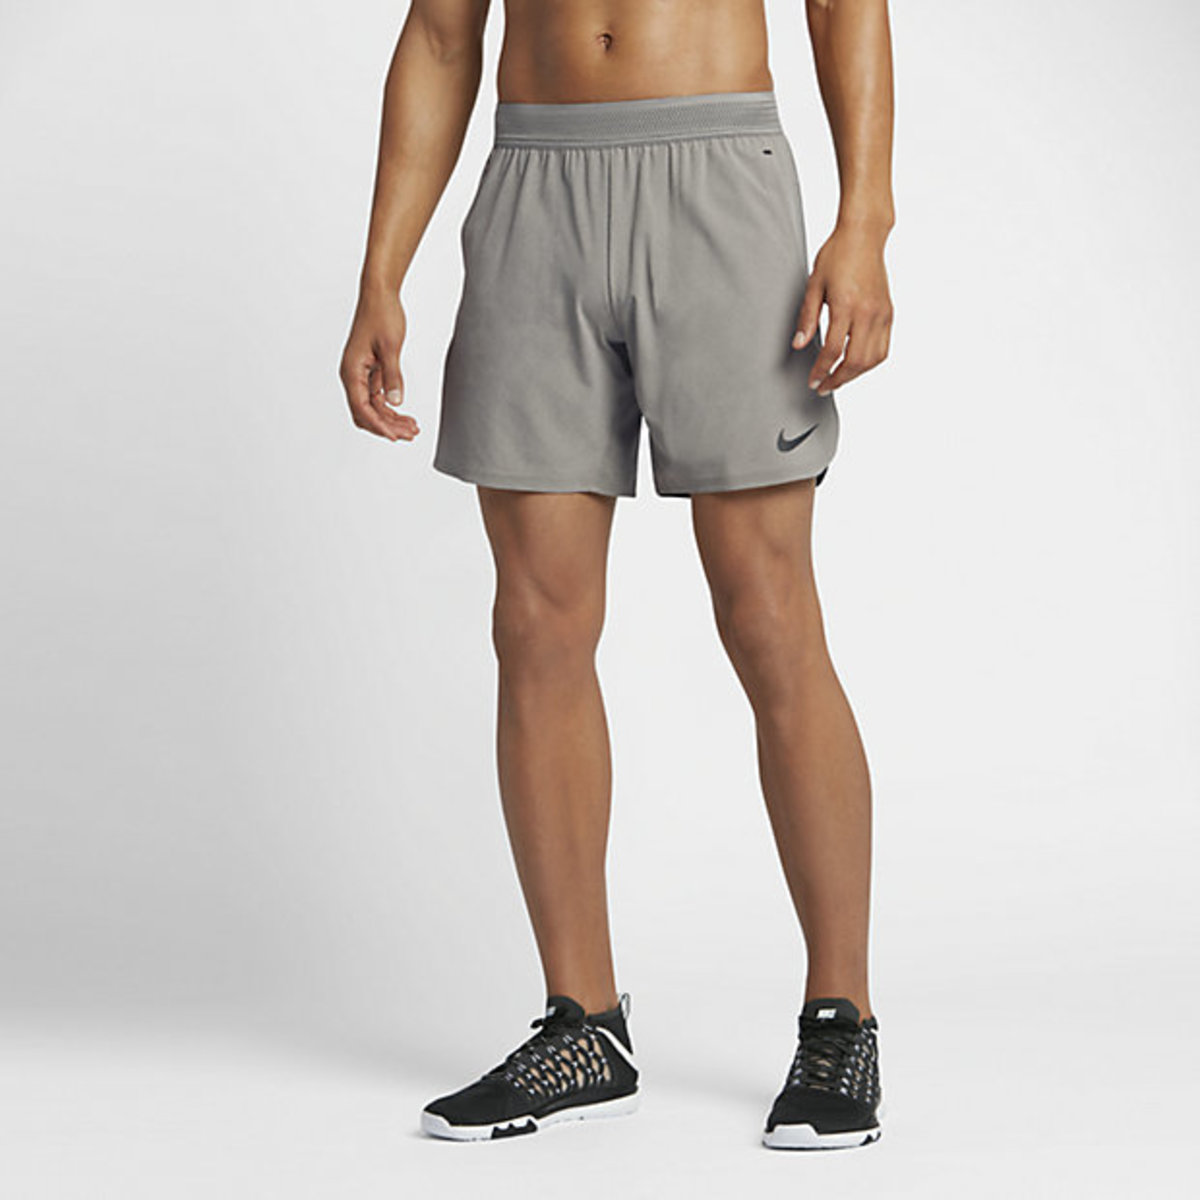 11 Pairs of Tough CrossFit Shorts for Men | Men's Journal - Men's Journal